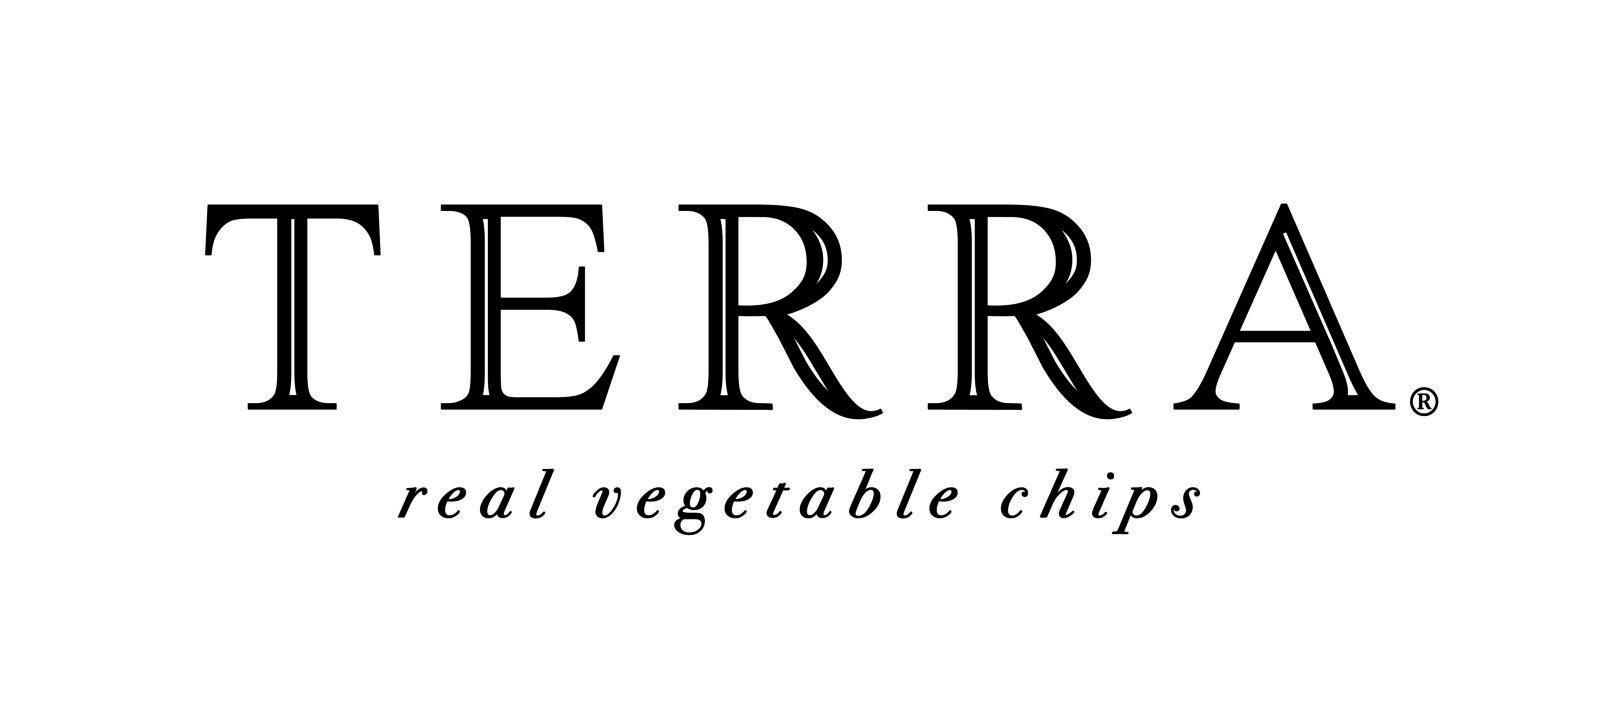 Terra real vegetable chips